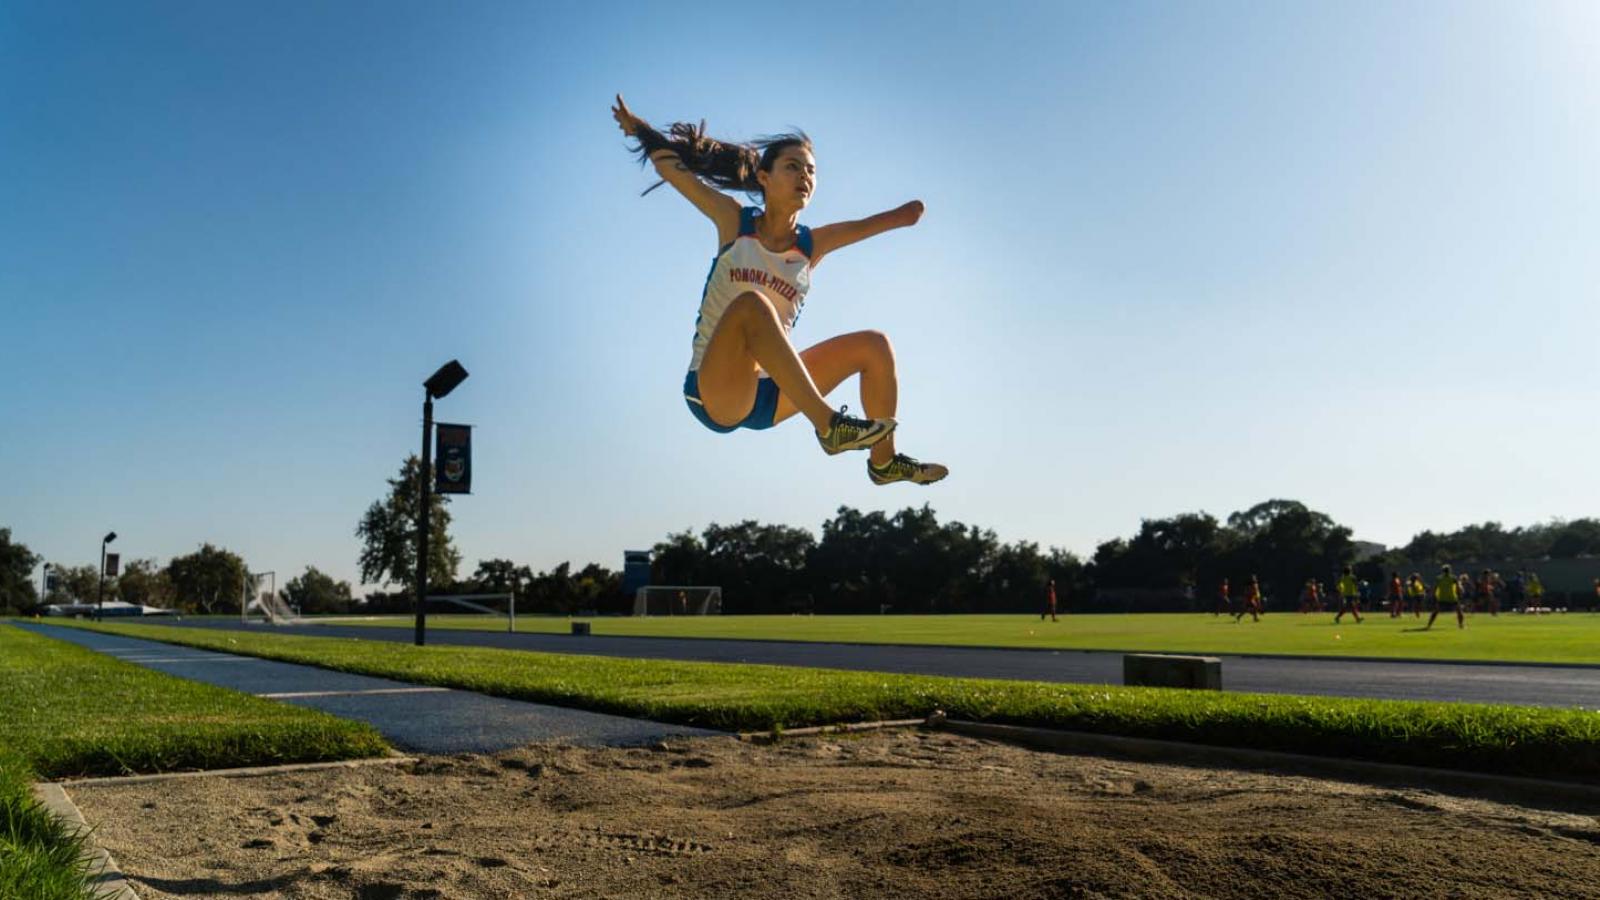 Amy Watt in the air doing a long jump